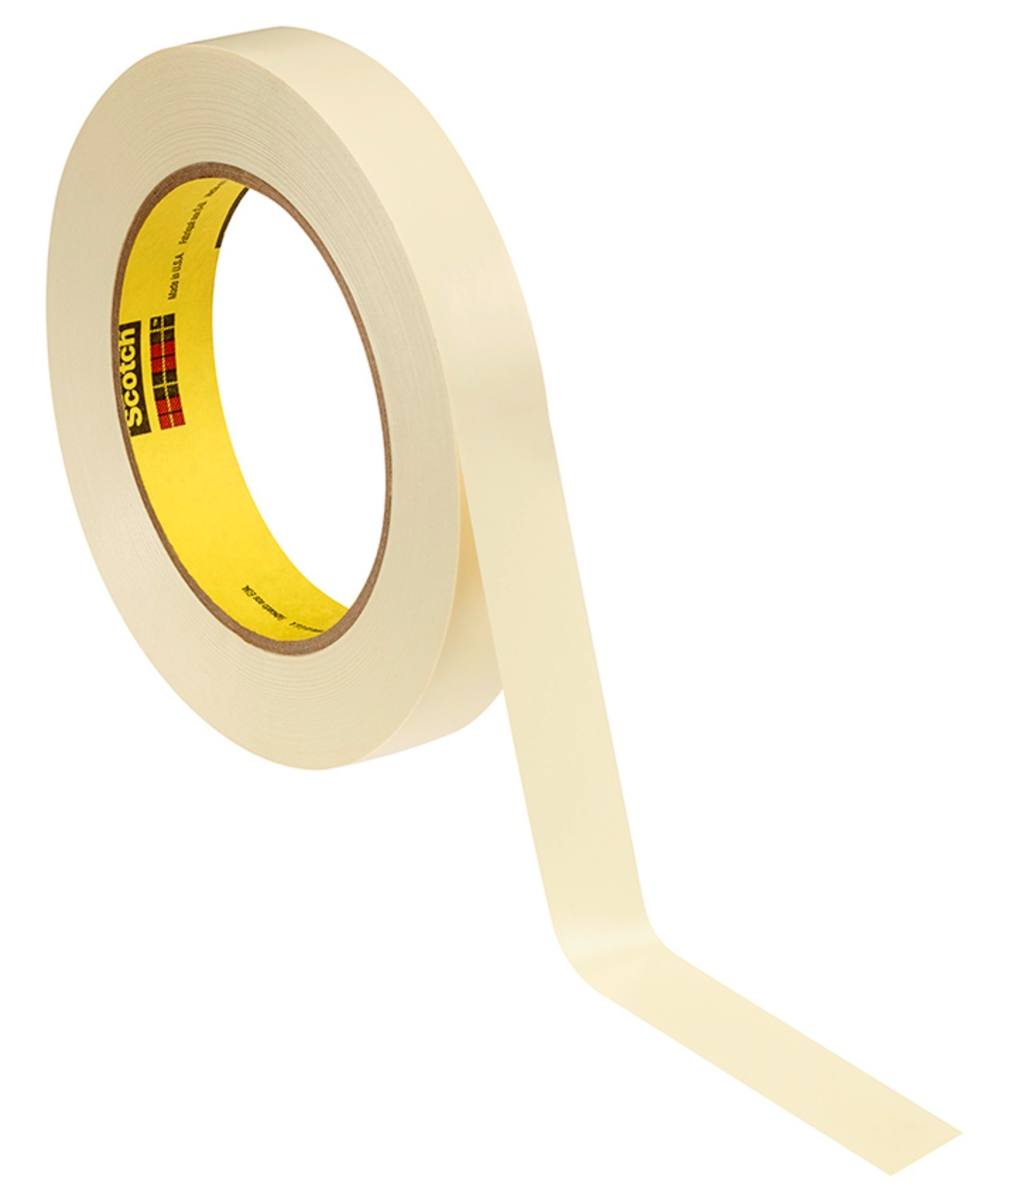 3M Electroplating tape soft PVC 470, yellow, 15 mm x 33 m, 0.18 mm